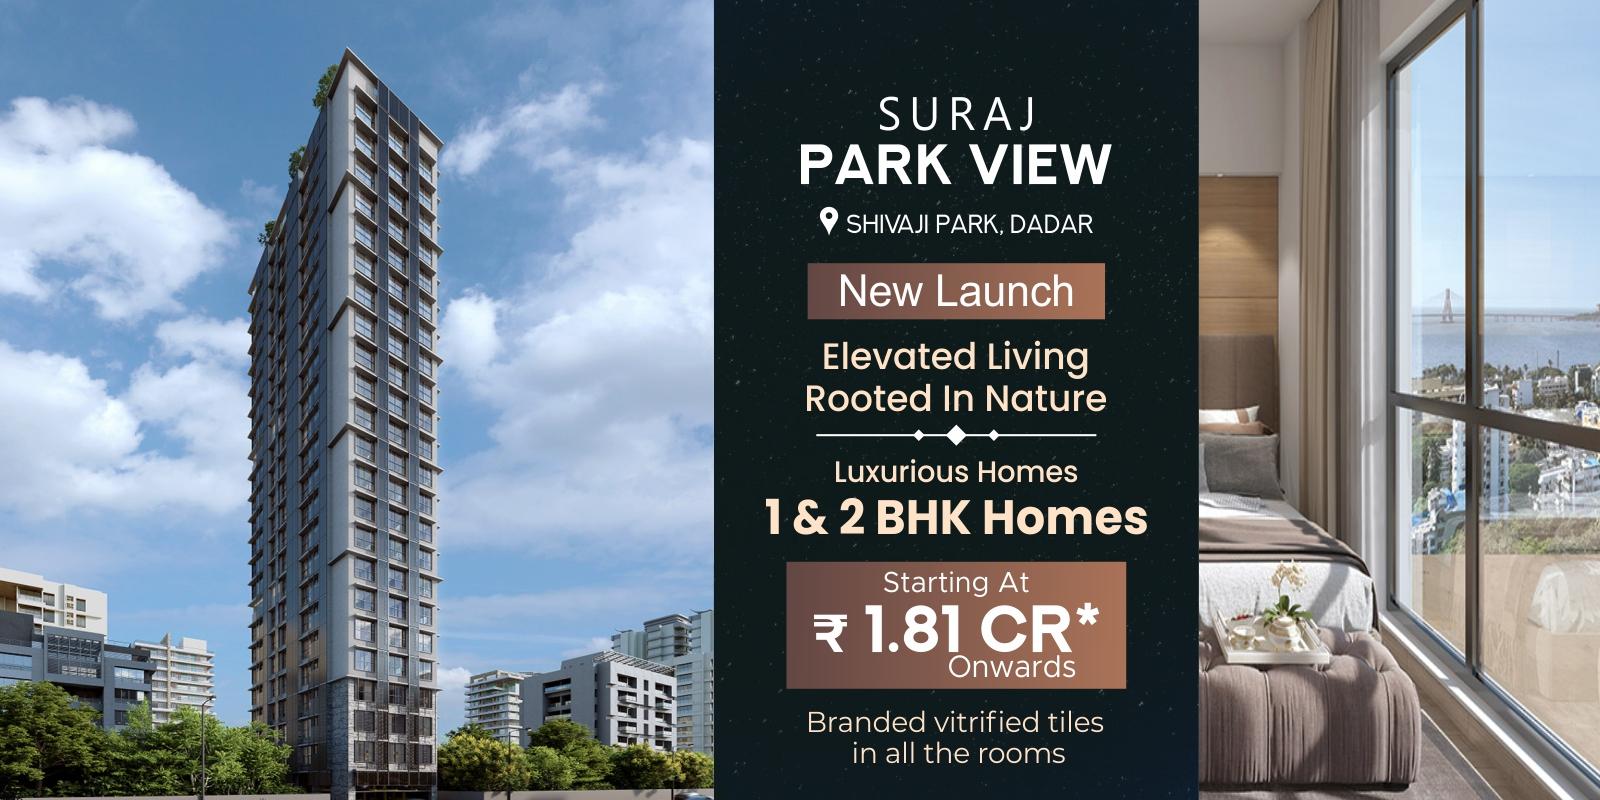 Suraj Park View Shivaji Park Dadar-suraj-park-view-banner.jpg